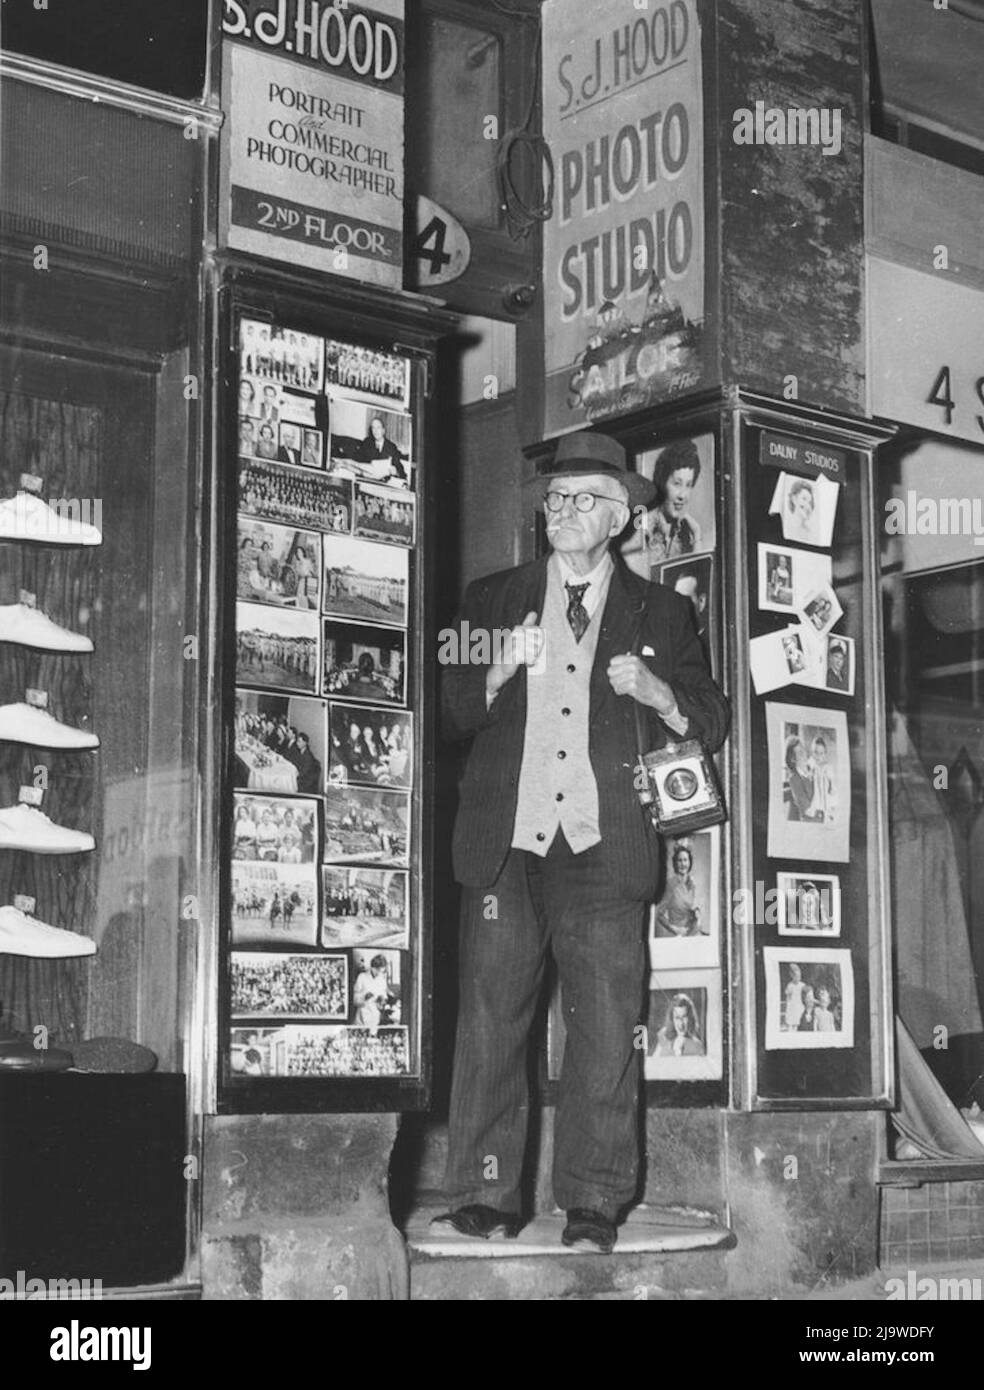 Sam Hood - außerhalb seines Dalny Studios - 1953 - Fotograf Ted Hood Stockfoto